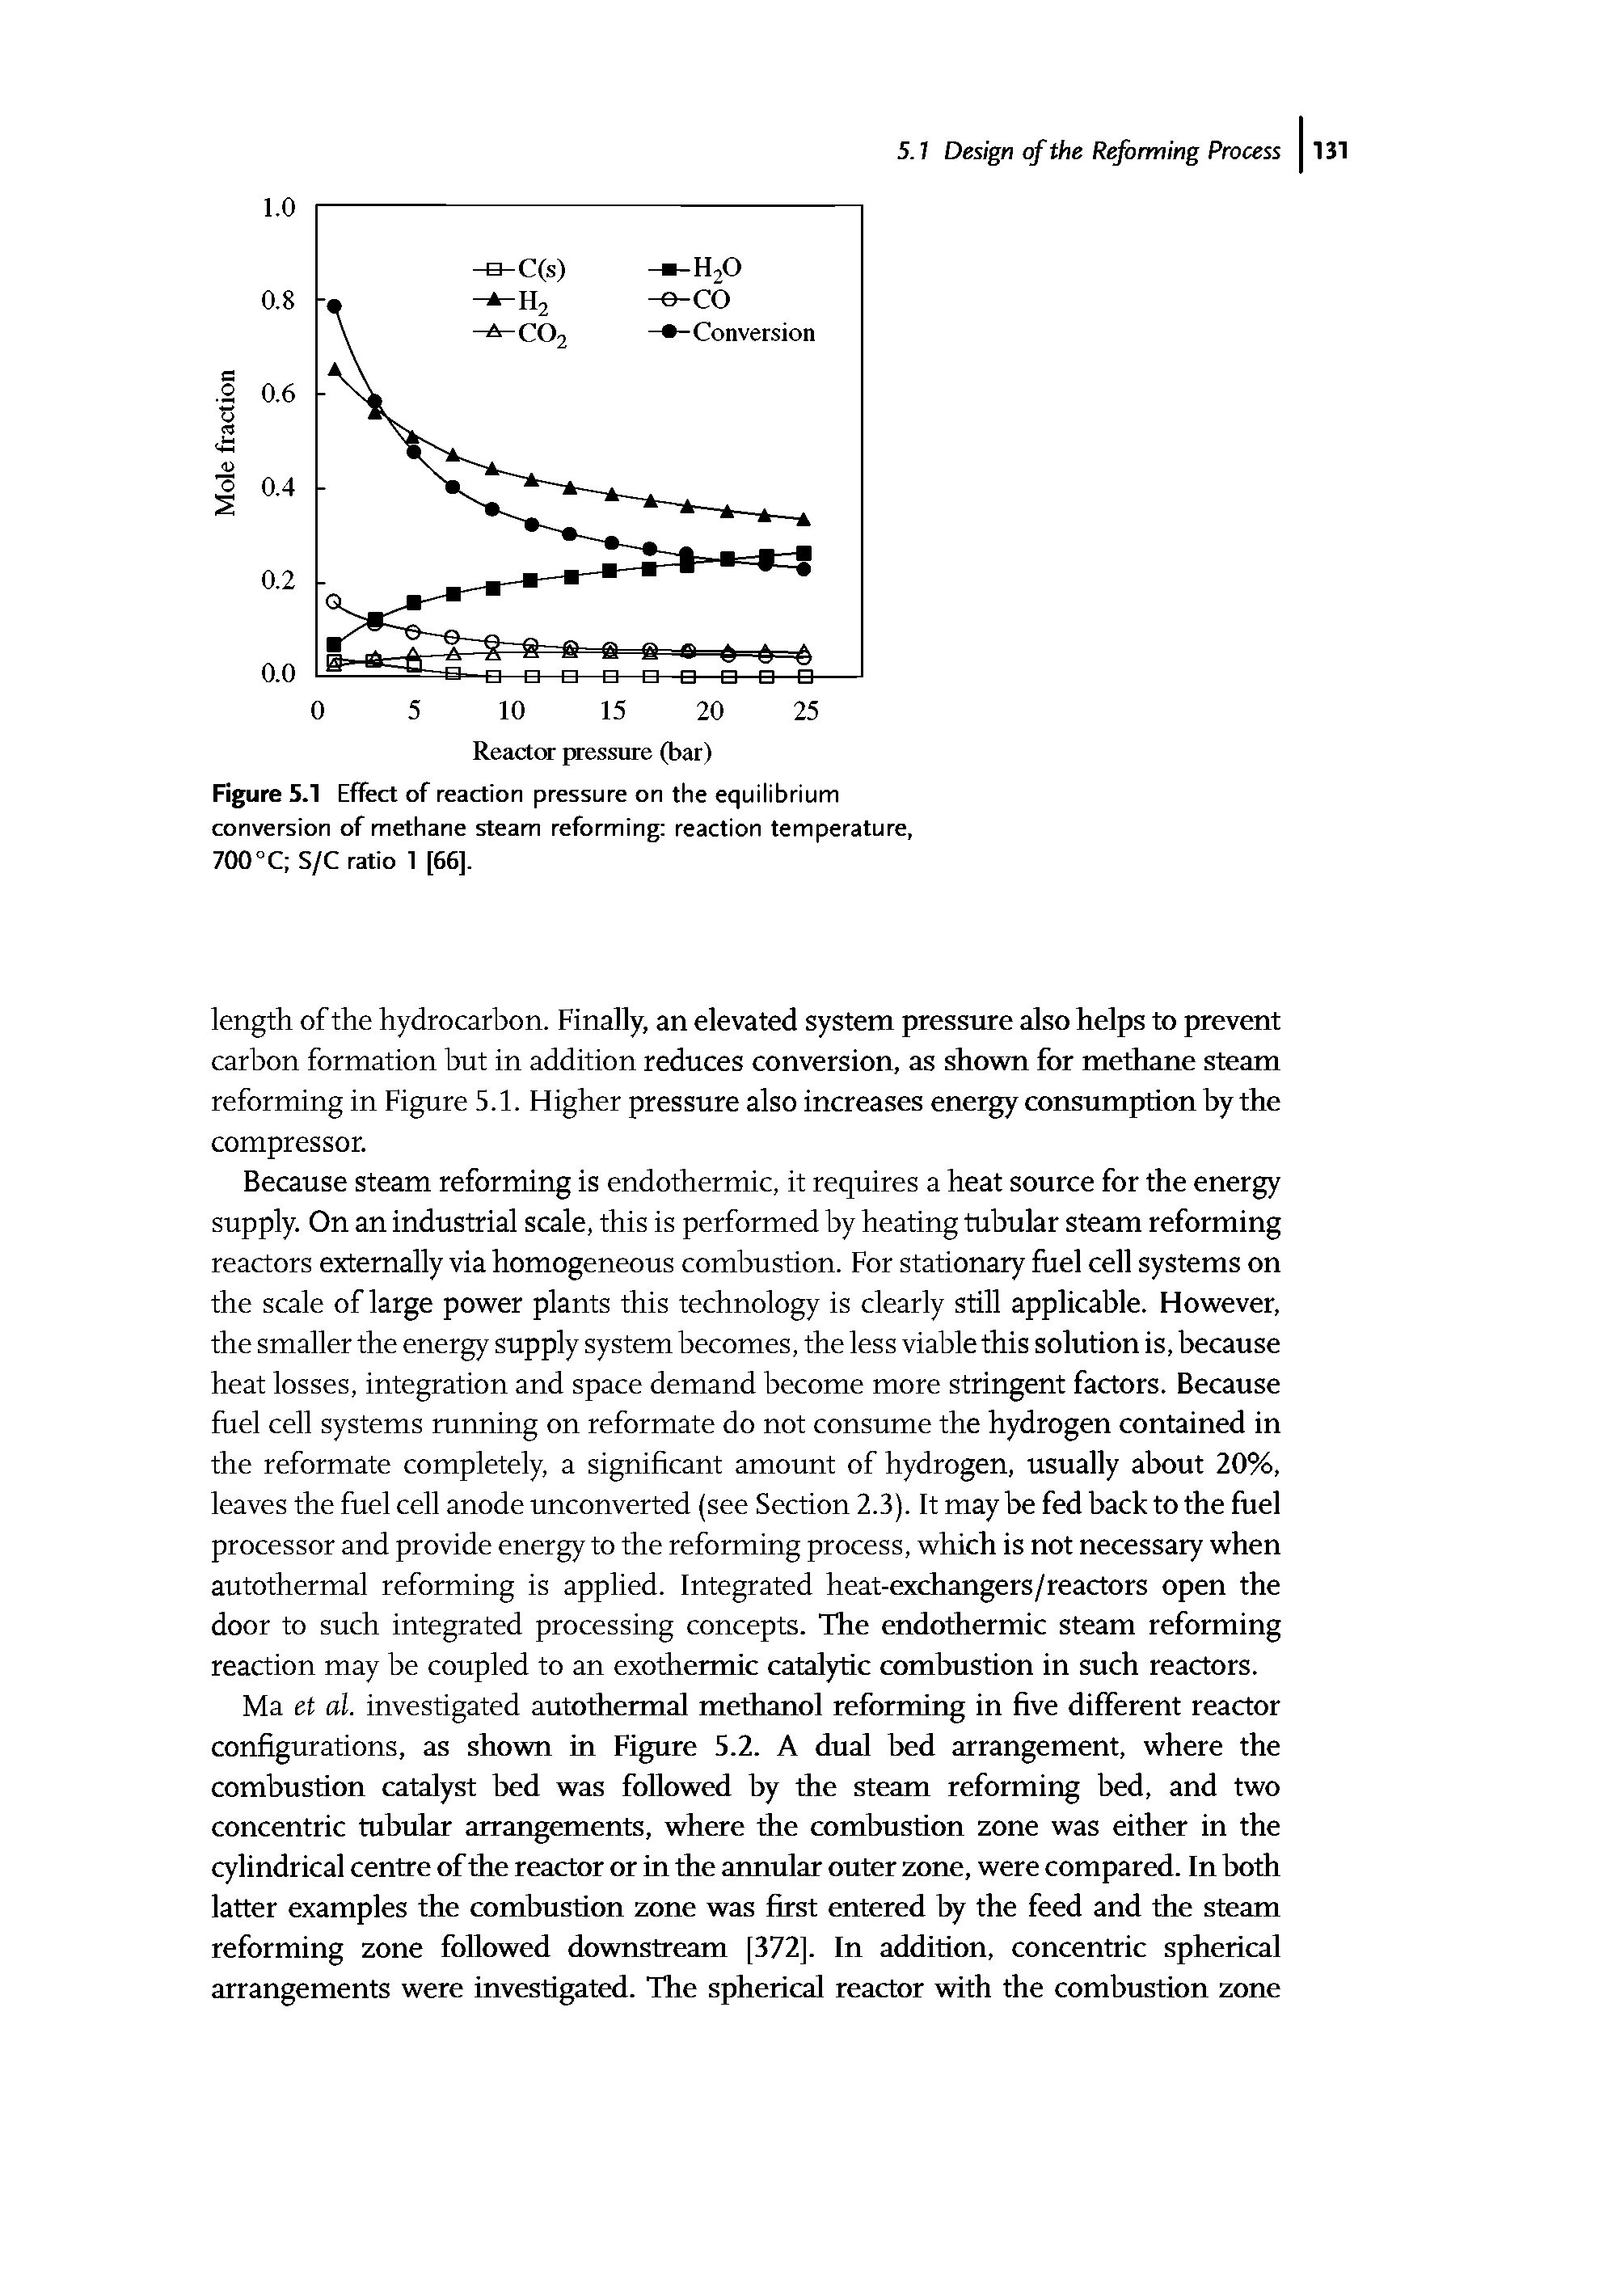 Figure 5.1 Effect of reaction pressure on the equilibrium conversion of methane steam reforming reaction temperature, 700 °C S/C ratio 1 [66],...